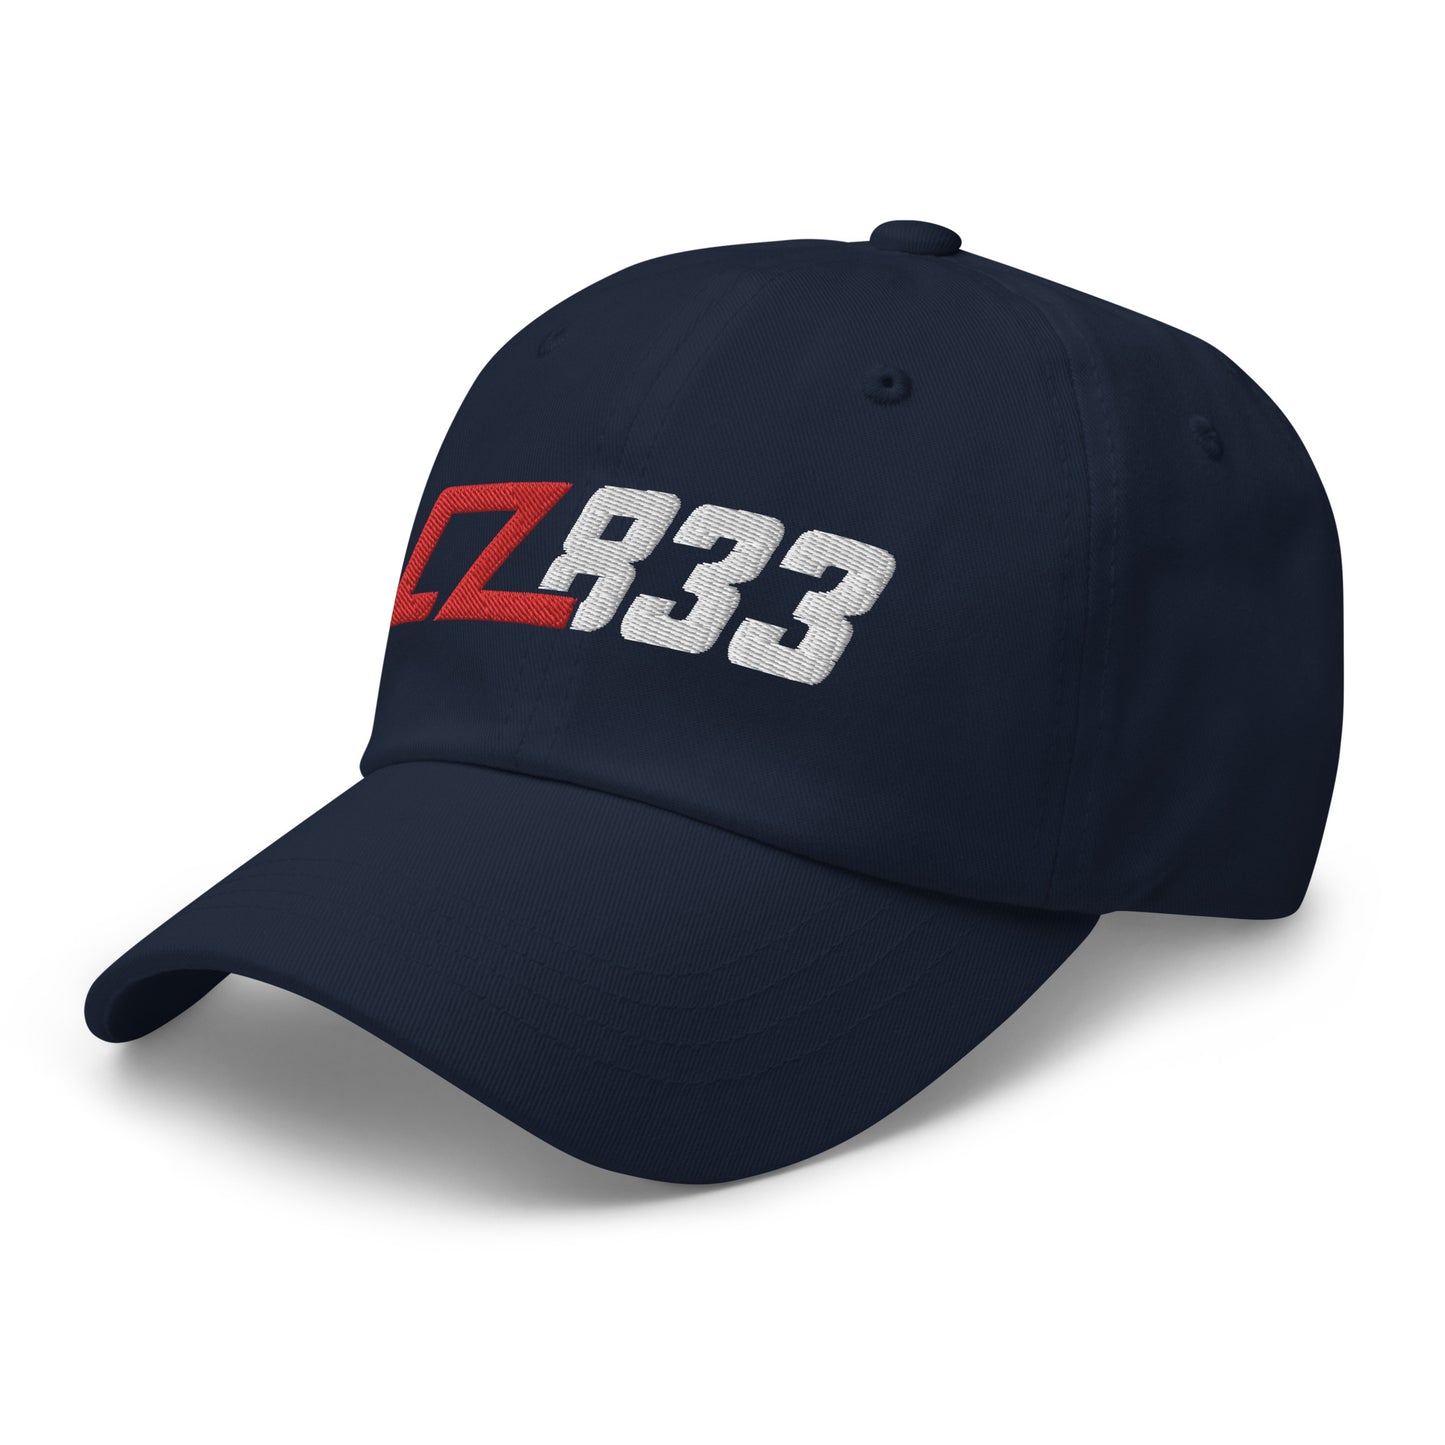 CZ833 Adjustable Cap